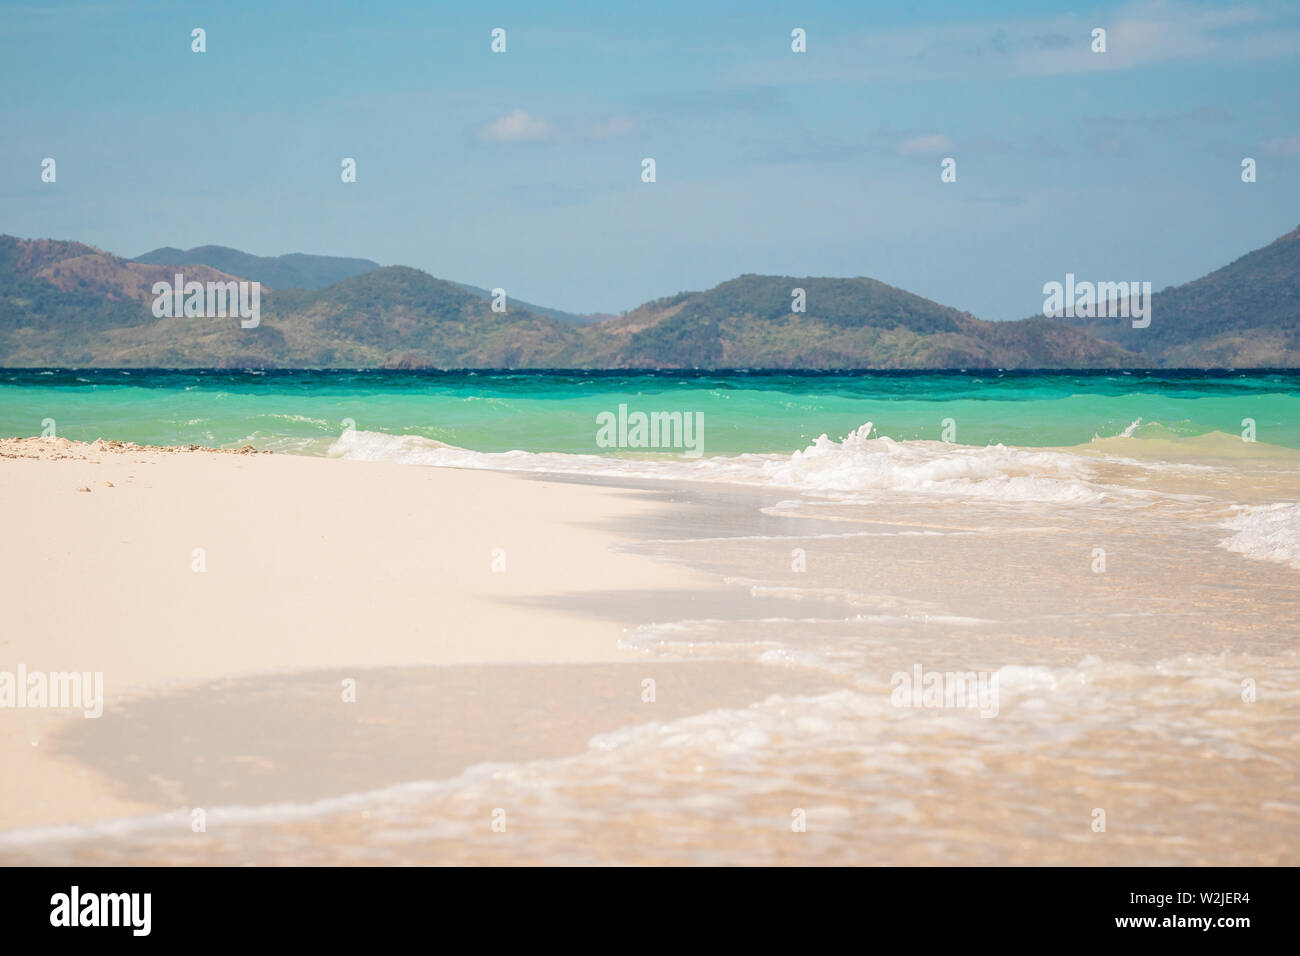 White beach with turquoise water and sandbar, Bulog island, Philippines. Stock Photo